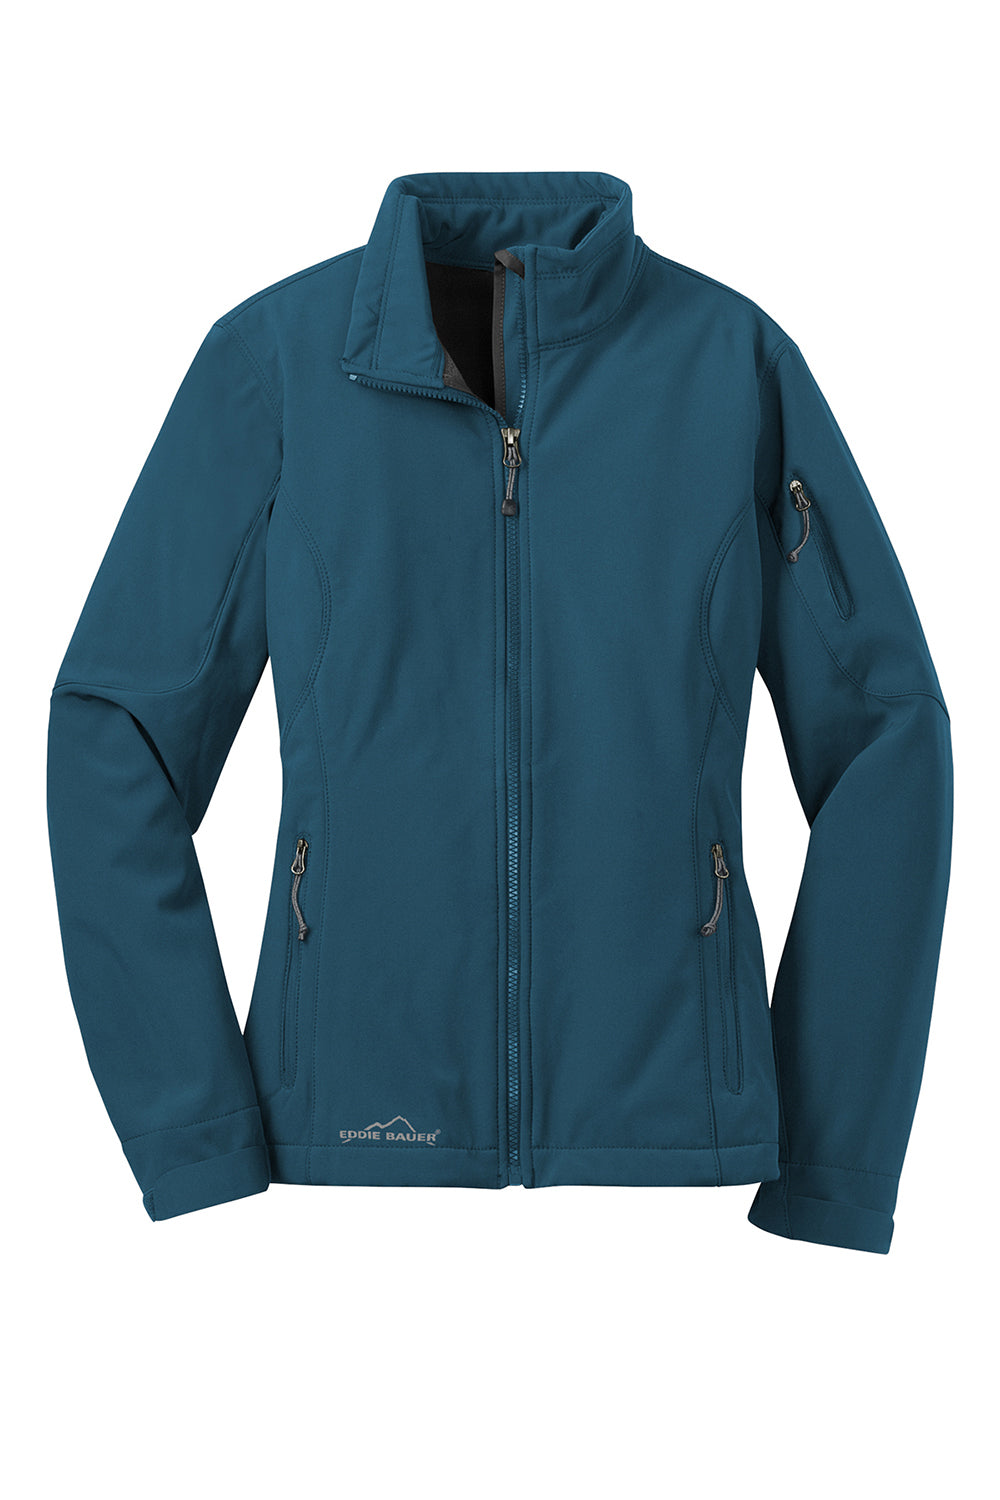 Eddie Bauer EB531 Womens Water Resistant Full Zip Jacket Dark Adriatic Blue Flat Front